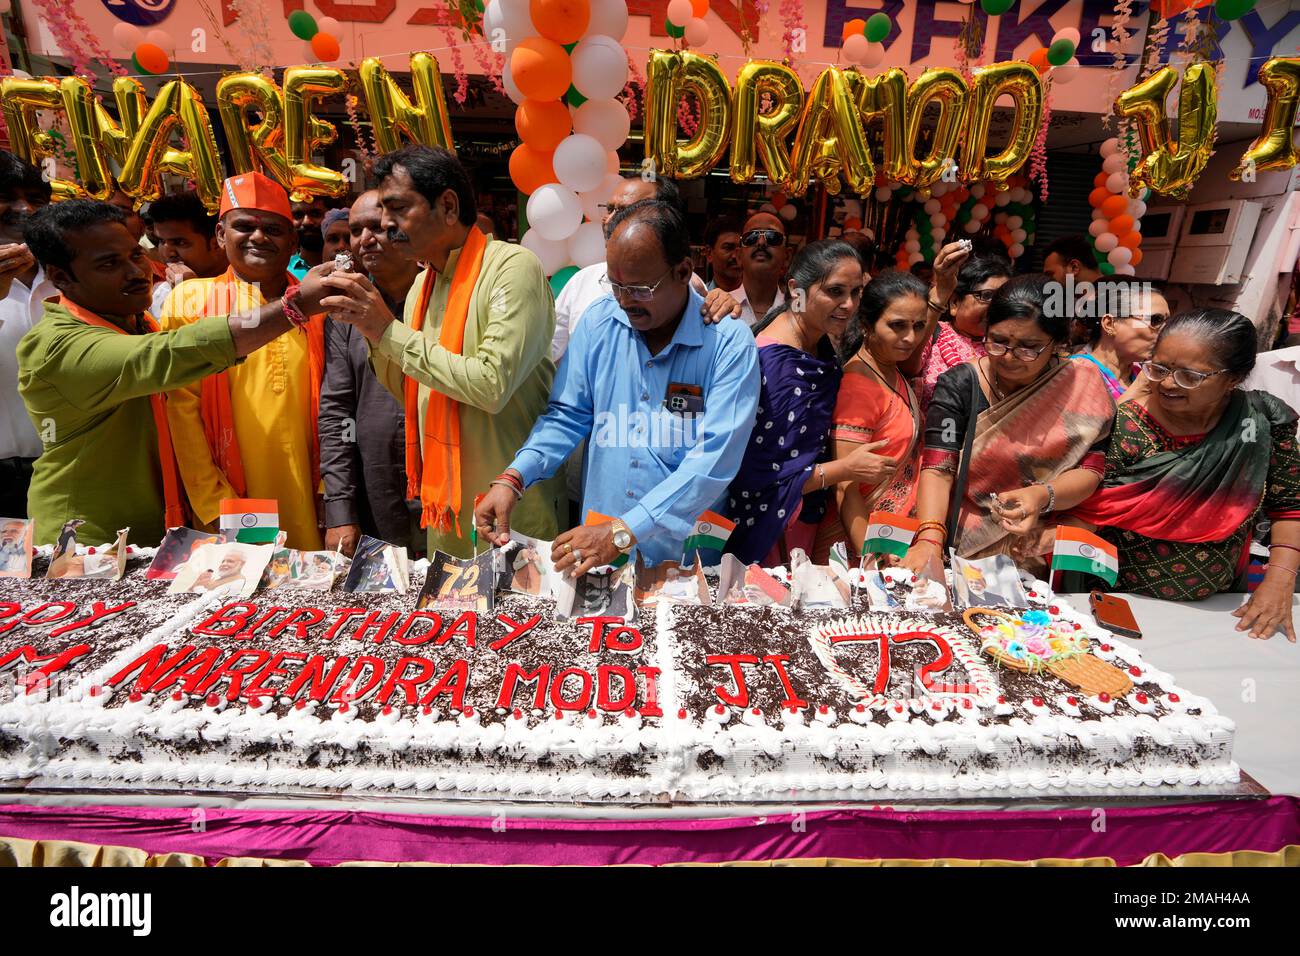 PM Modi Birthday 2019: 700-feet-long cake on the theme of corruption to  celebrate PM Narendra Modi's birthday